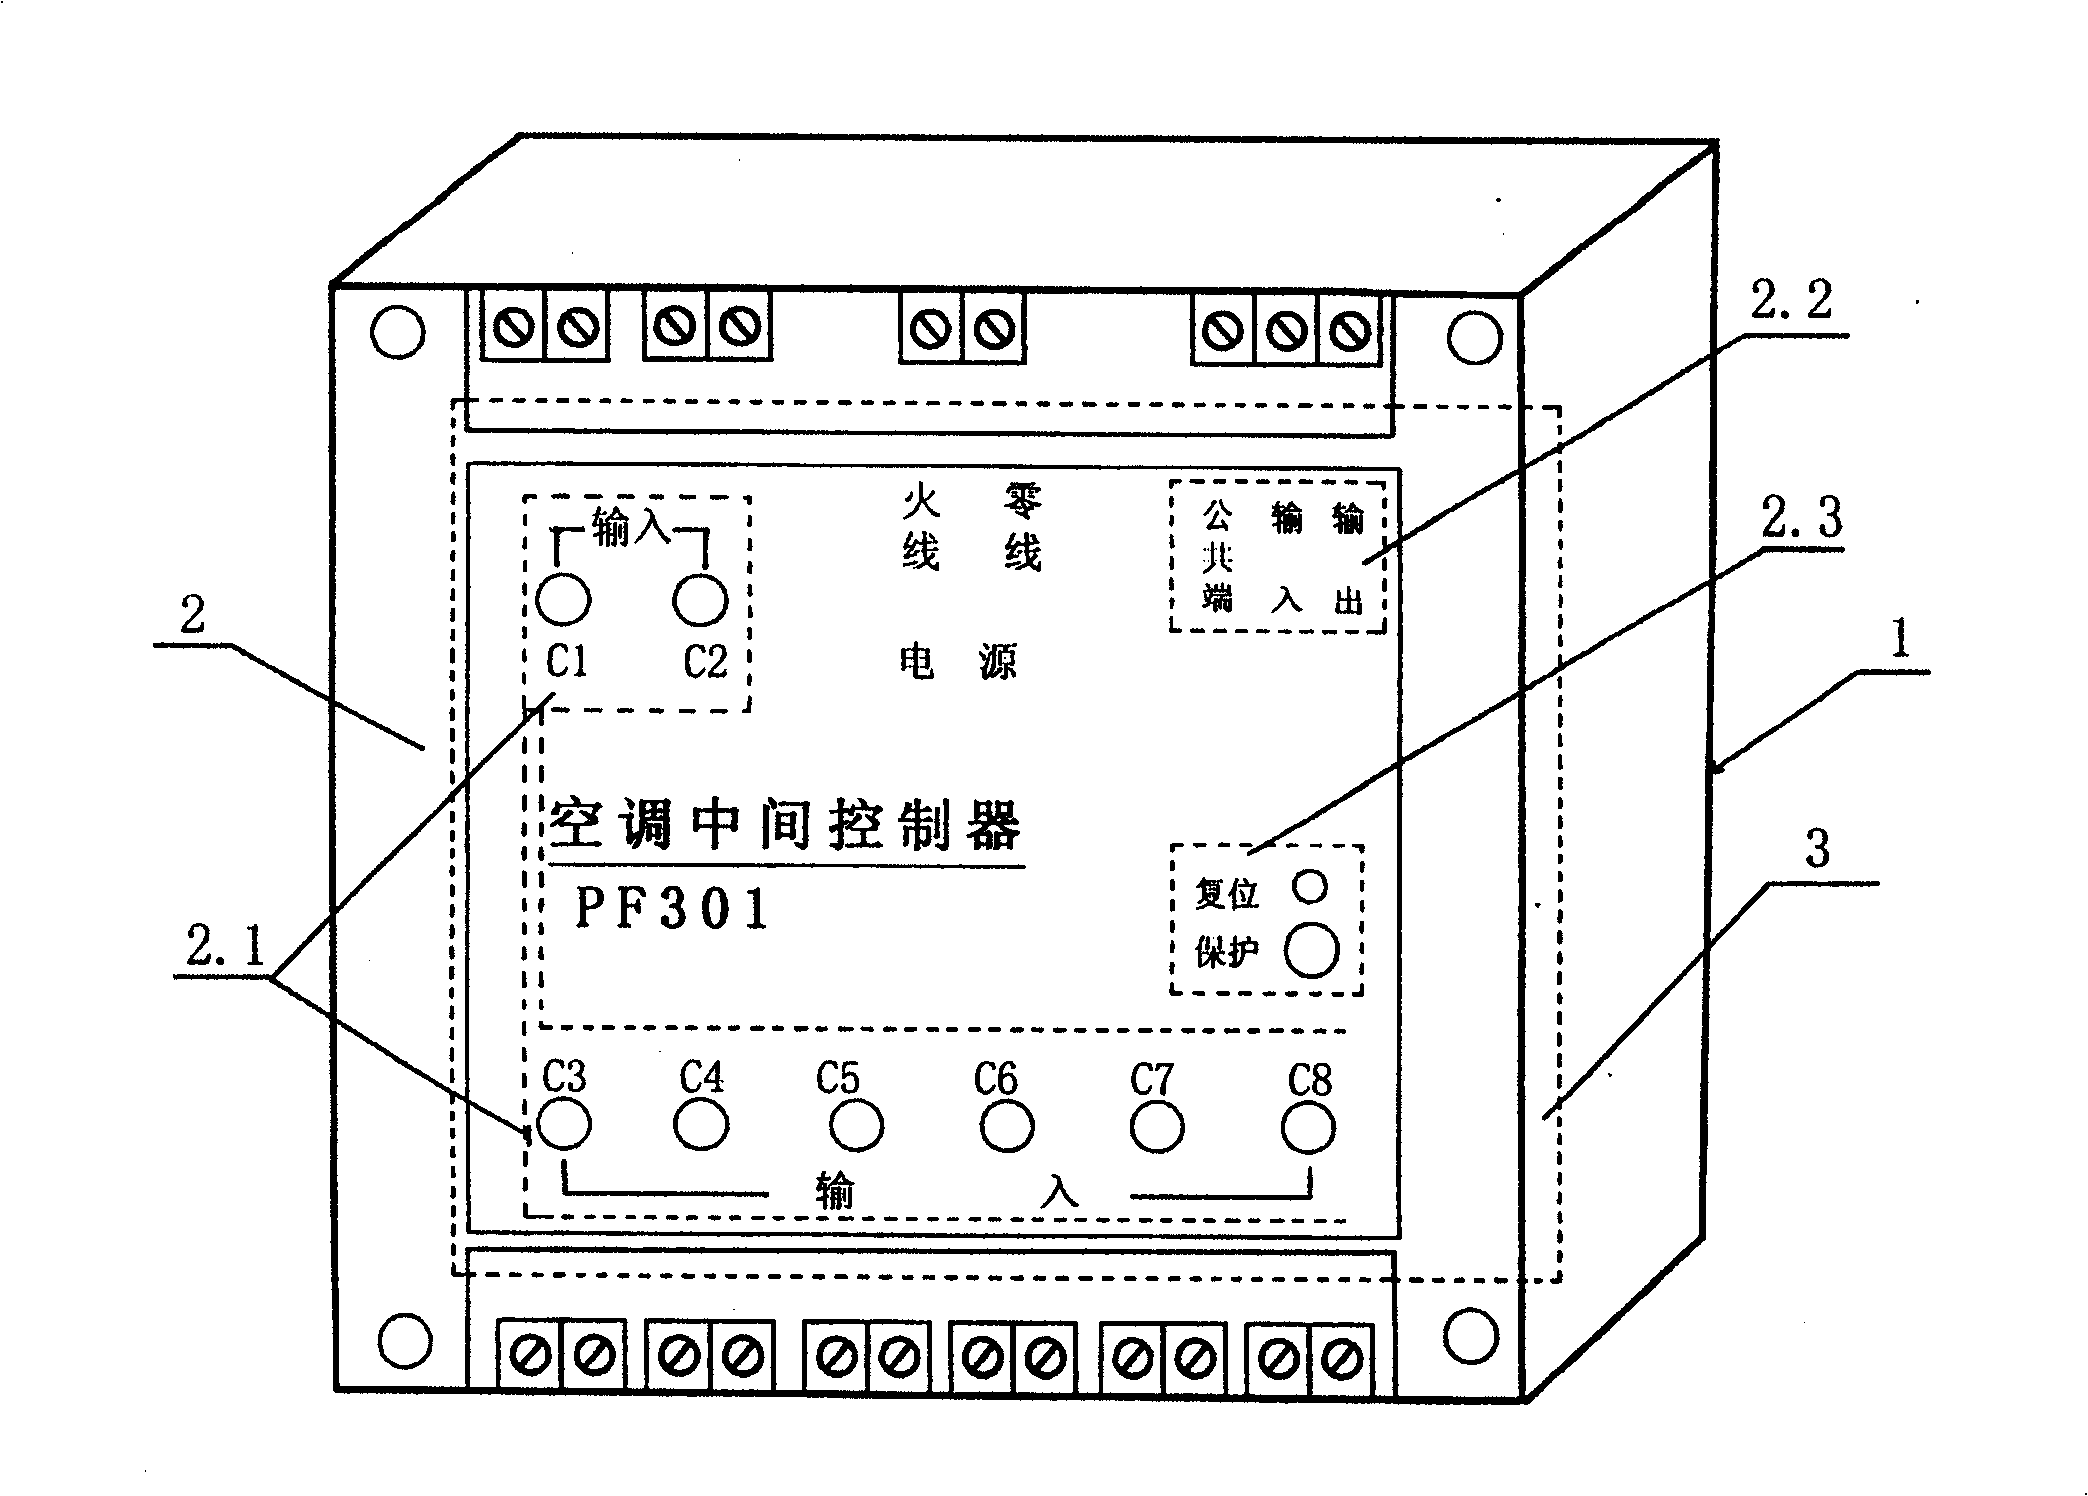 Air-conditioning intermediate controller